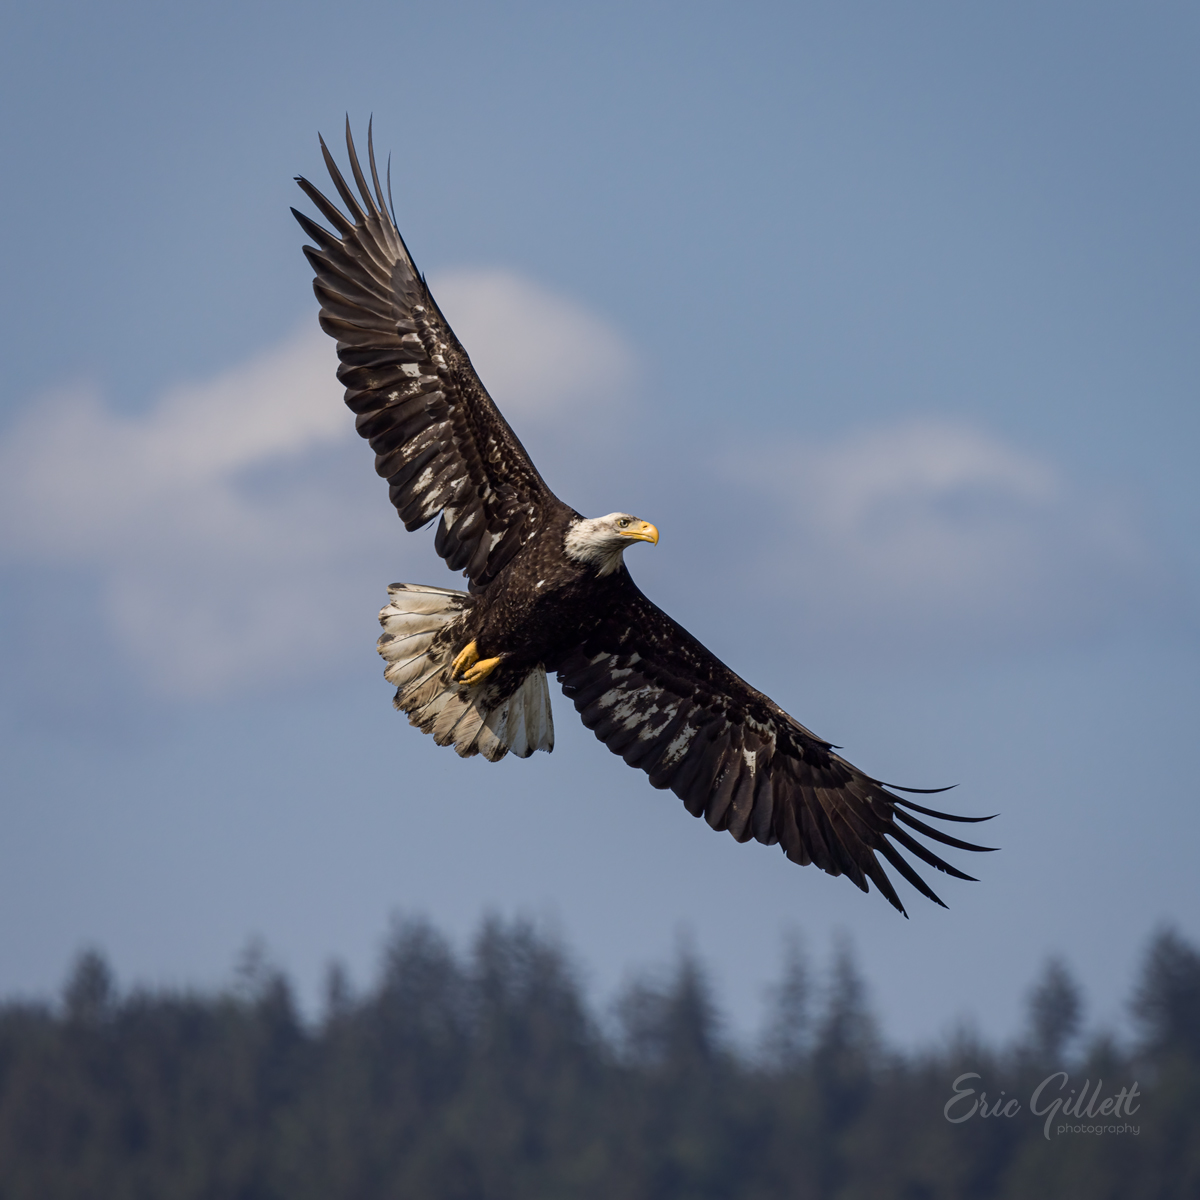 Juvenile Bald Eagle 🦅

#birdphotography
#birdwatching